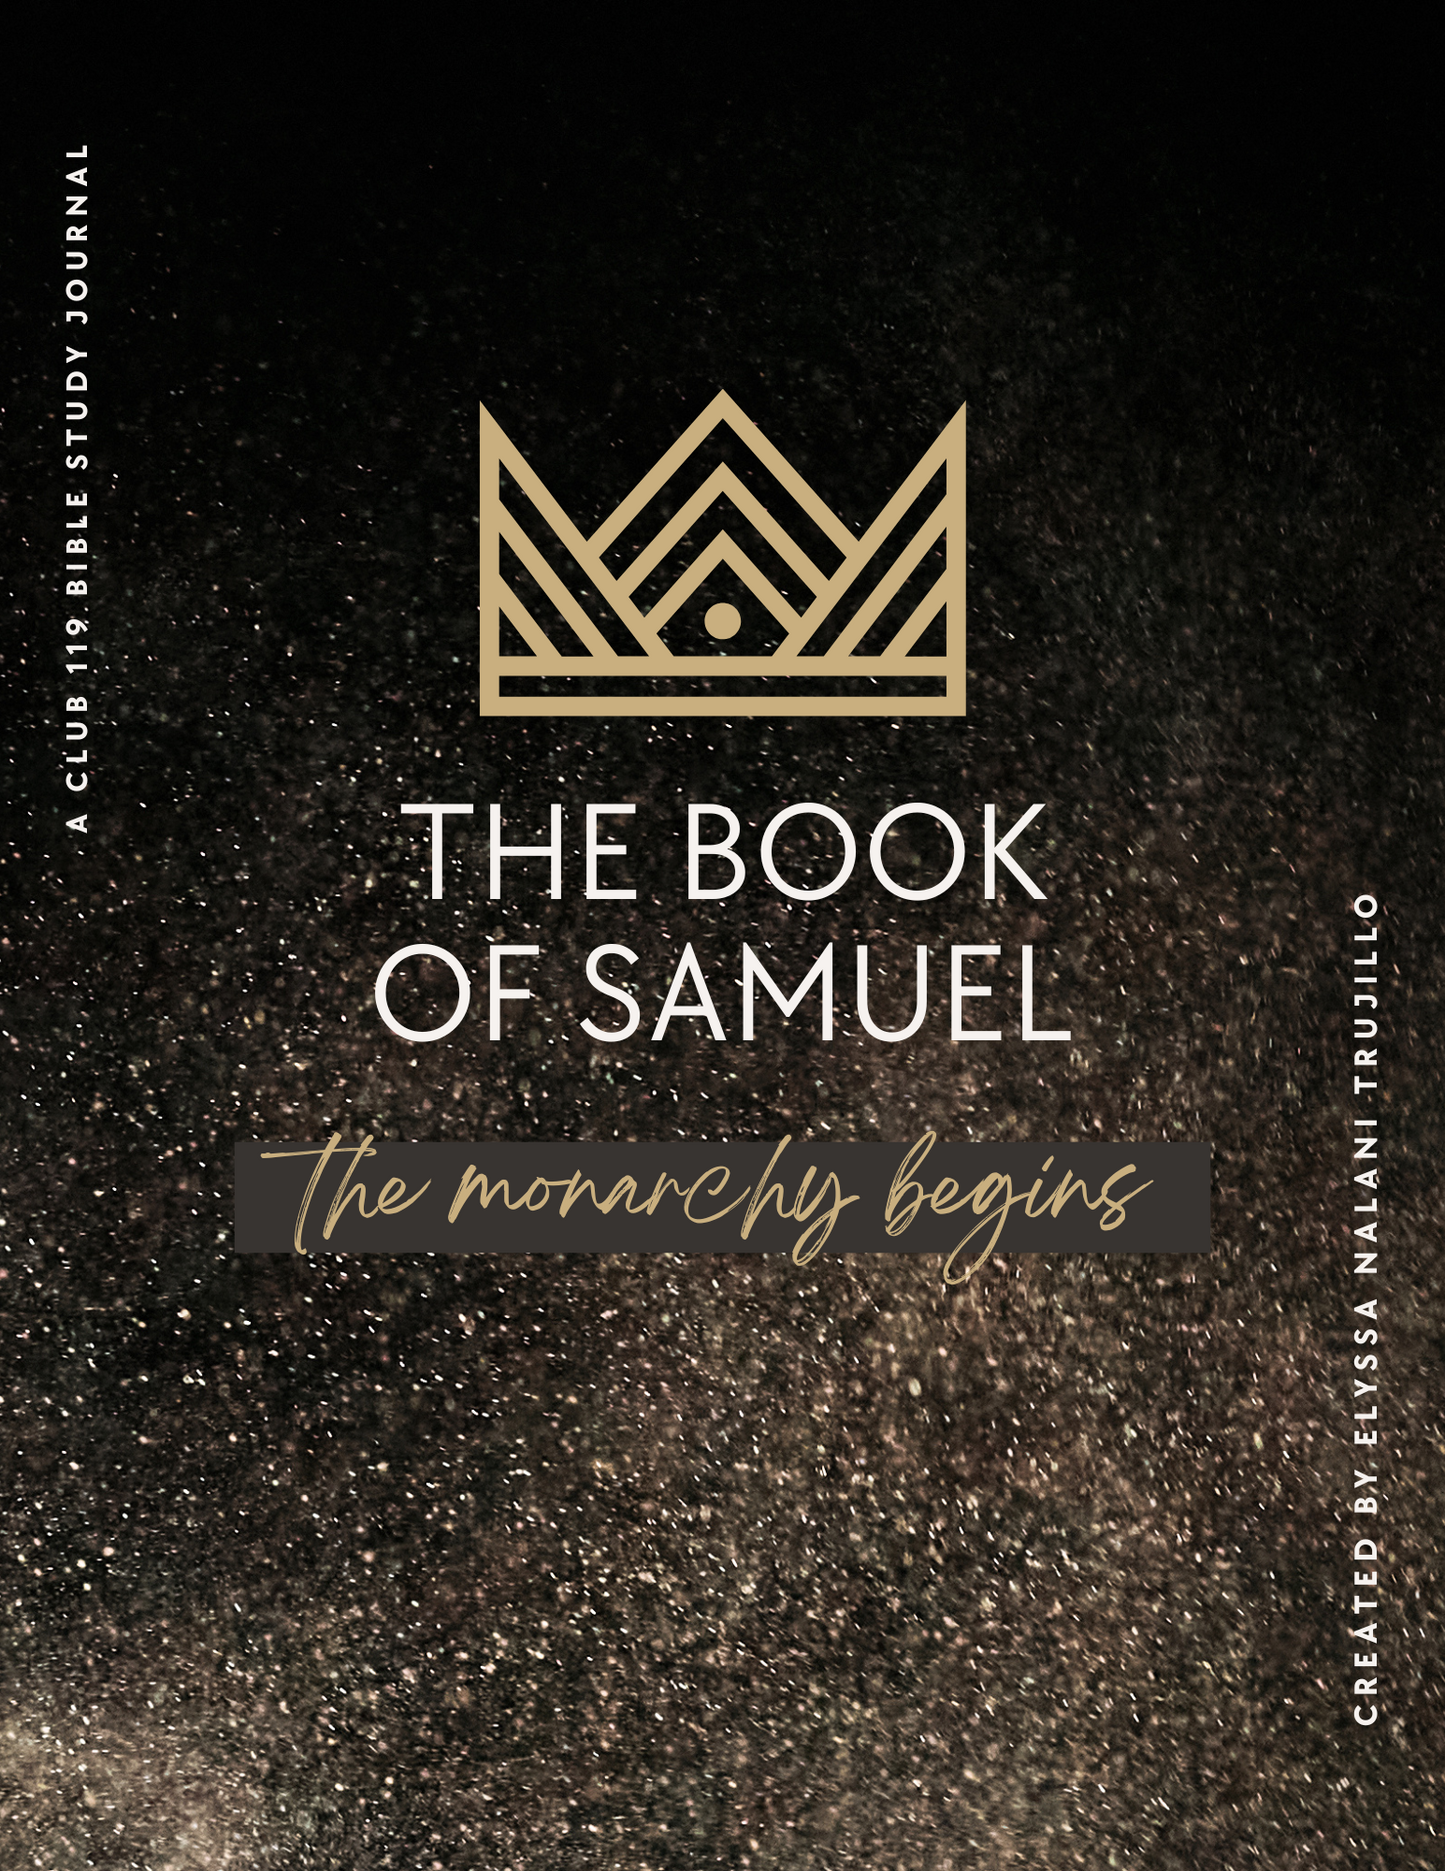 The Book of Samuel | Club 119 Study Journal